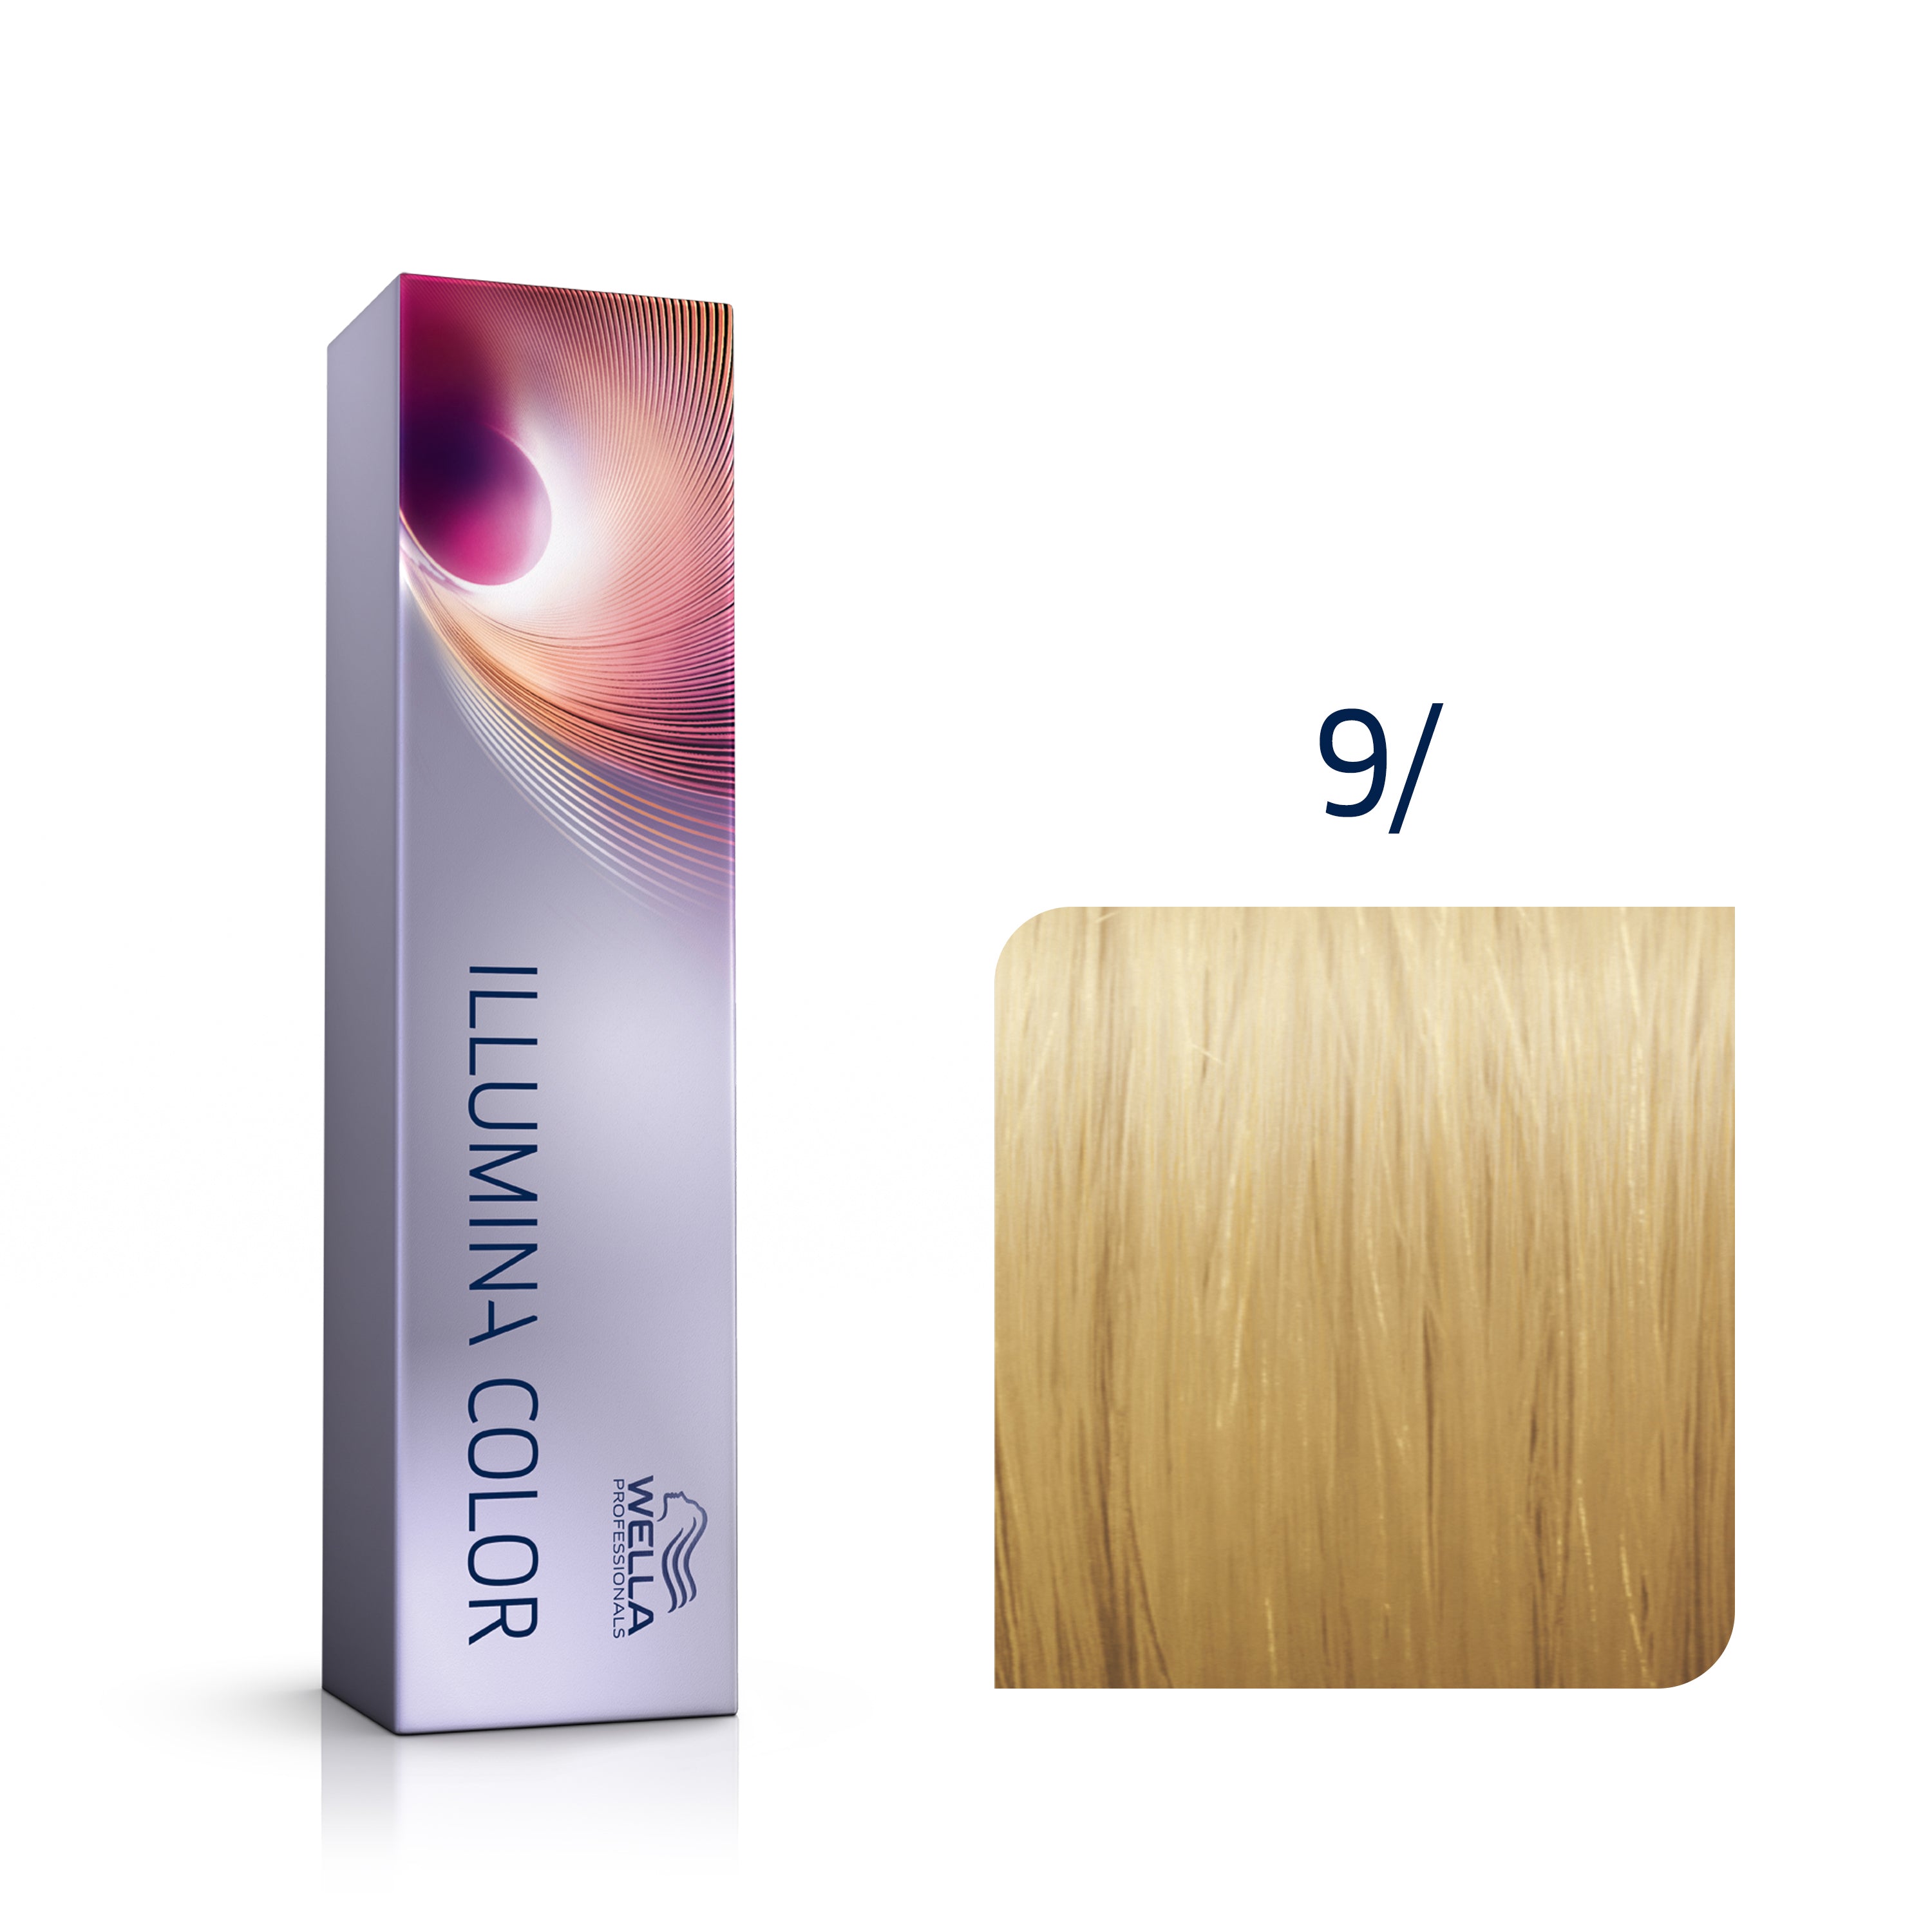 Wella Professional Illumina 9/ 60 ml